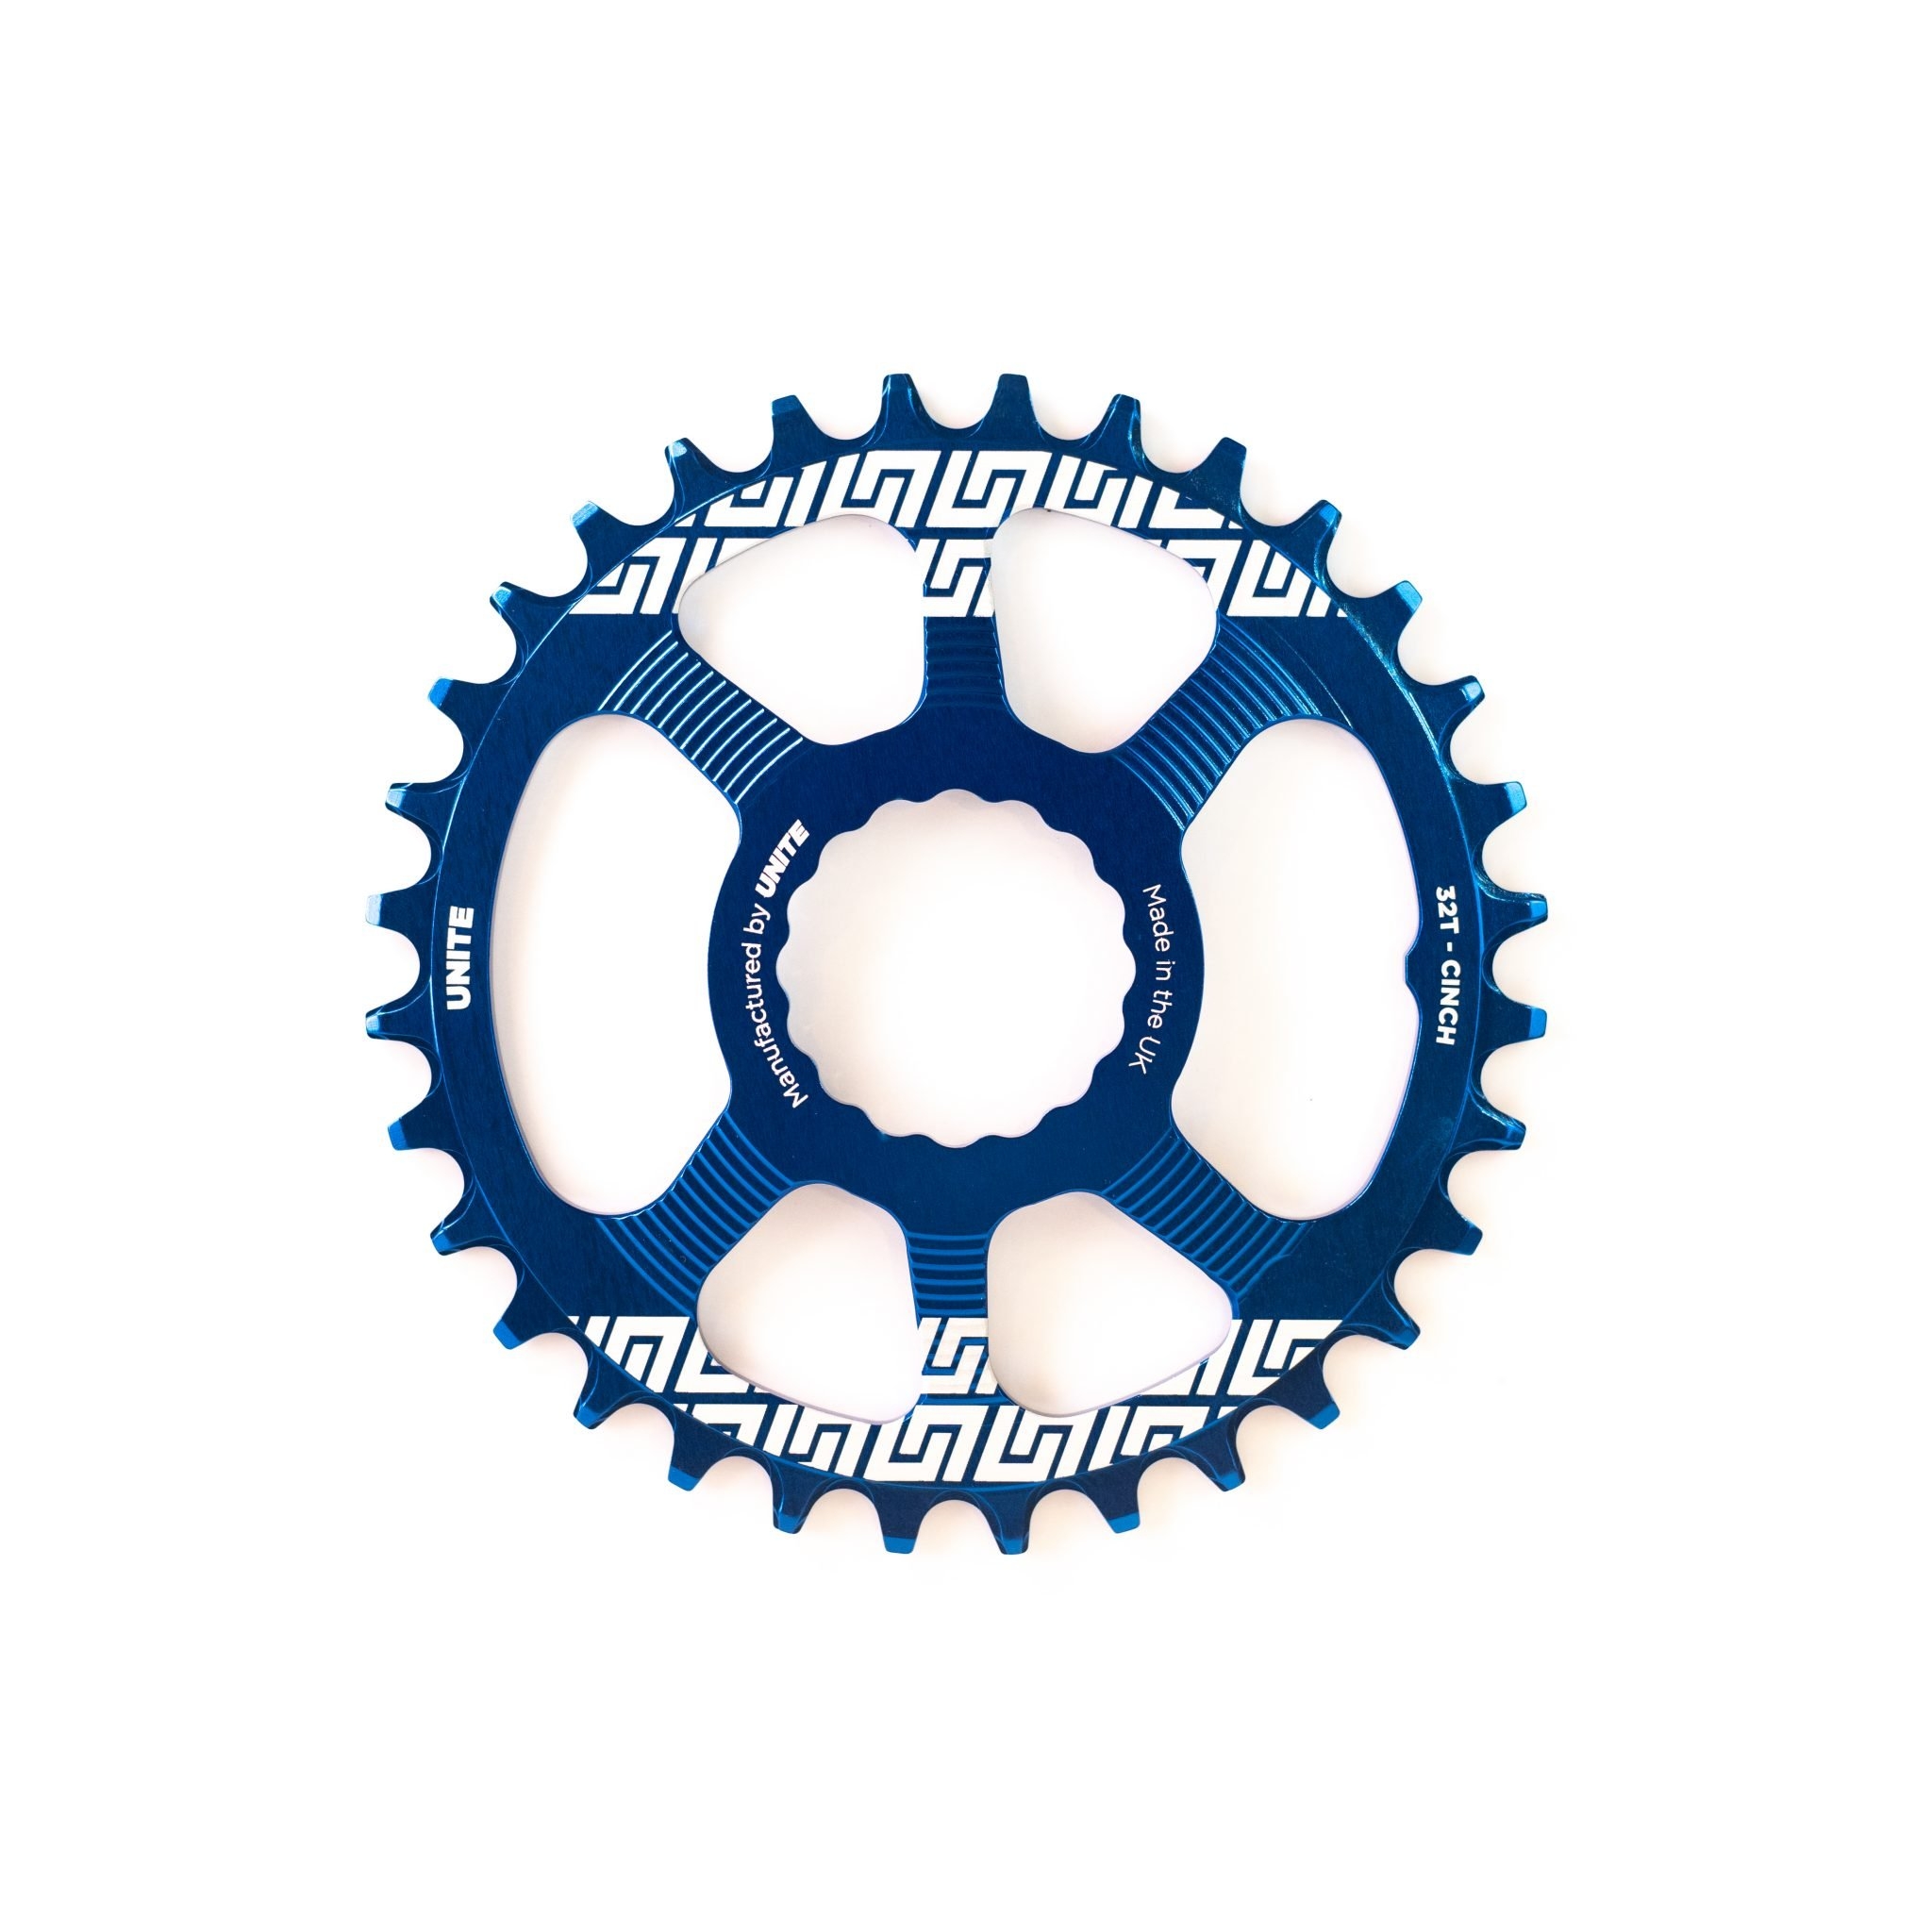 Unite Chain Ring – Raceface Direct Mount Blue 32T